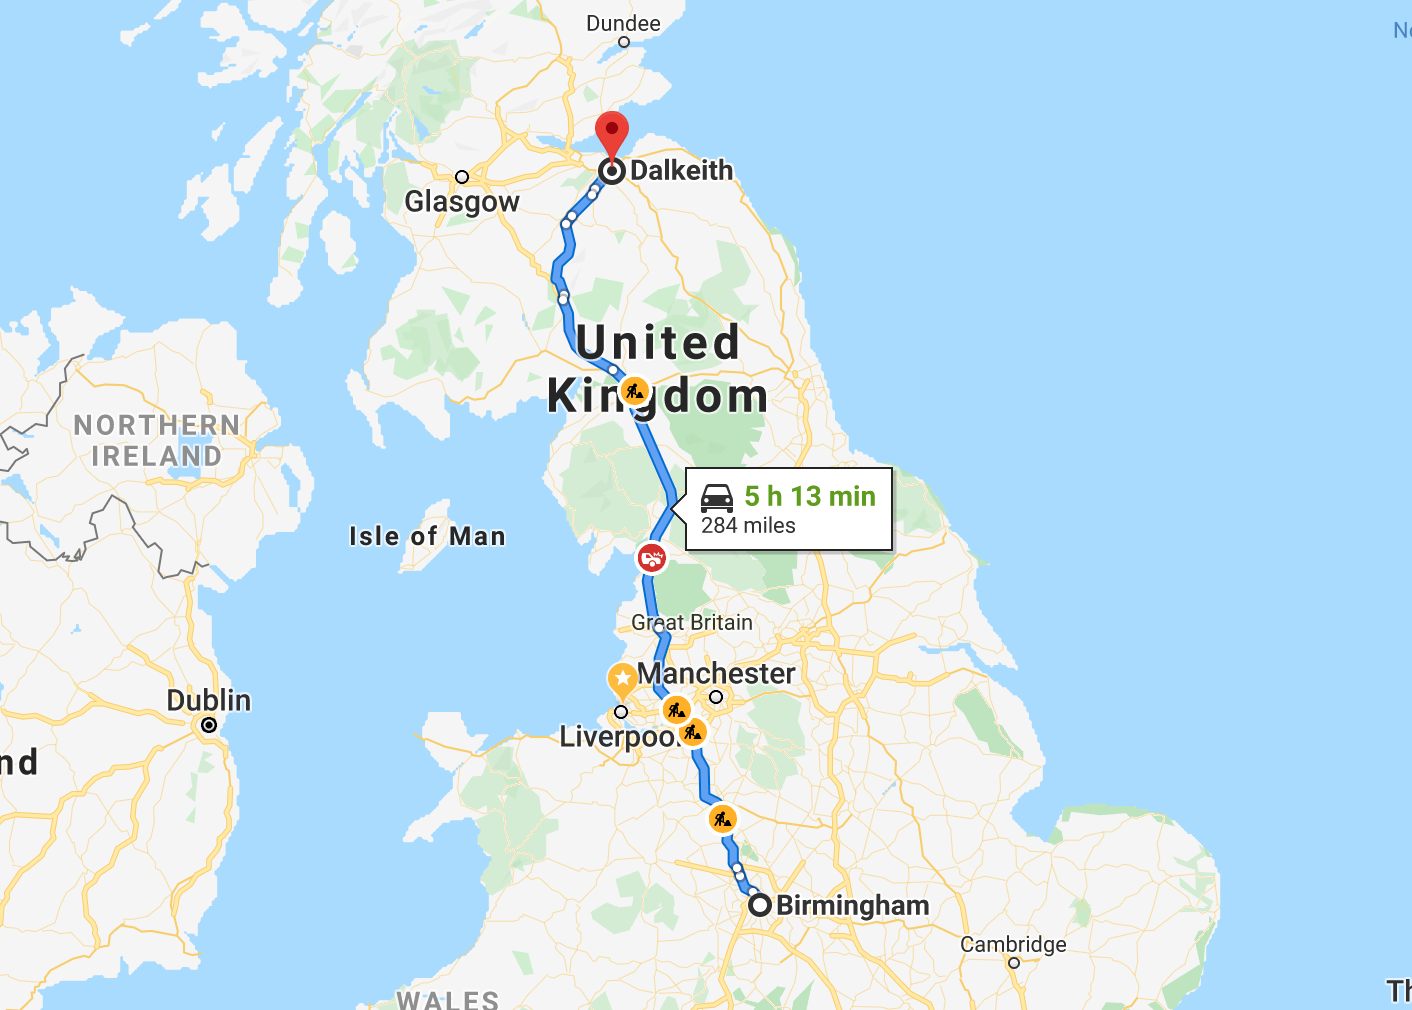 Birmingham to Dalkieth - only around 300 . miles each way!